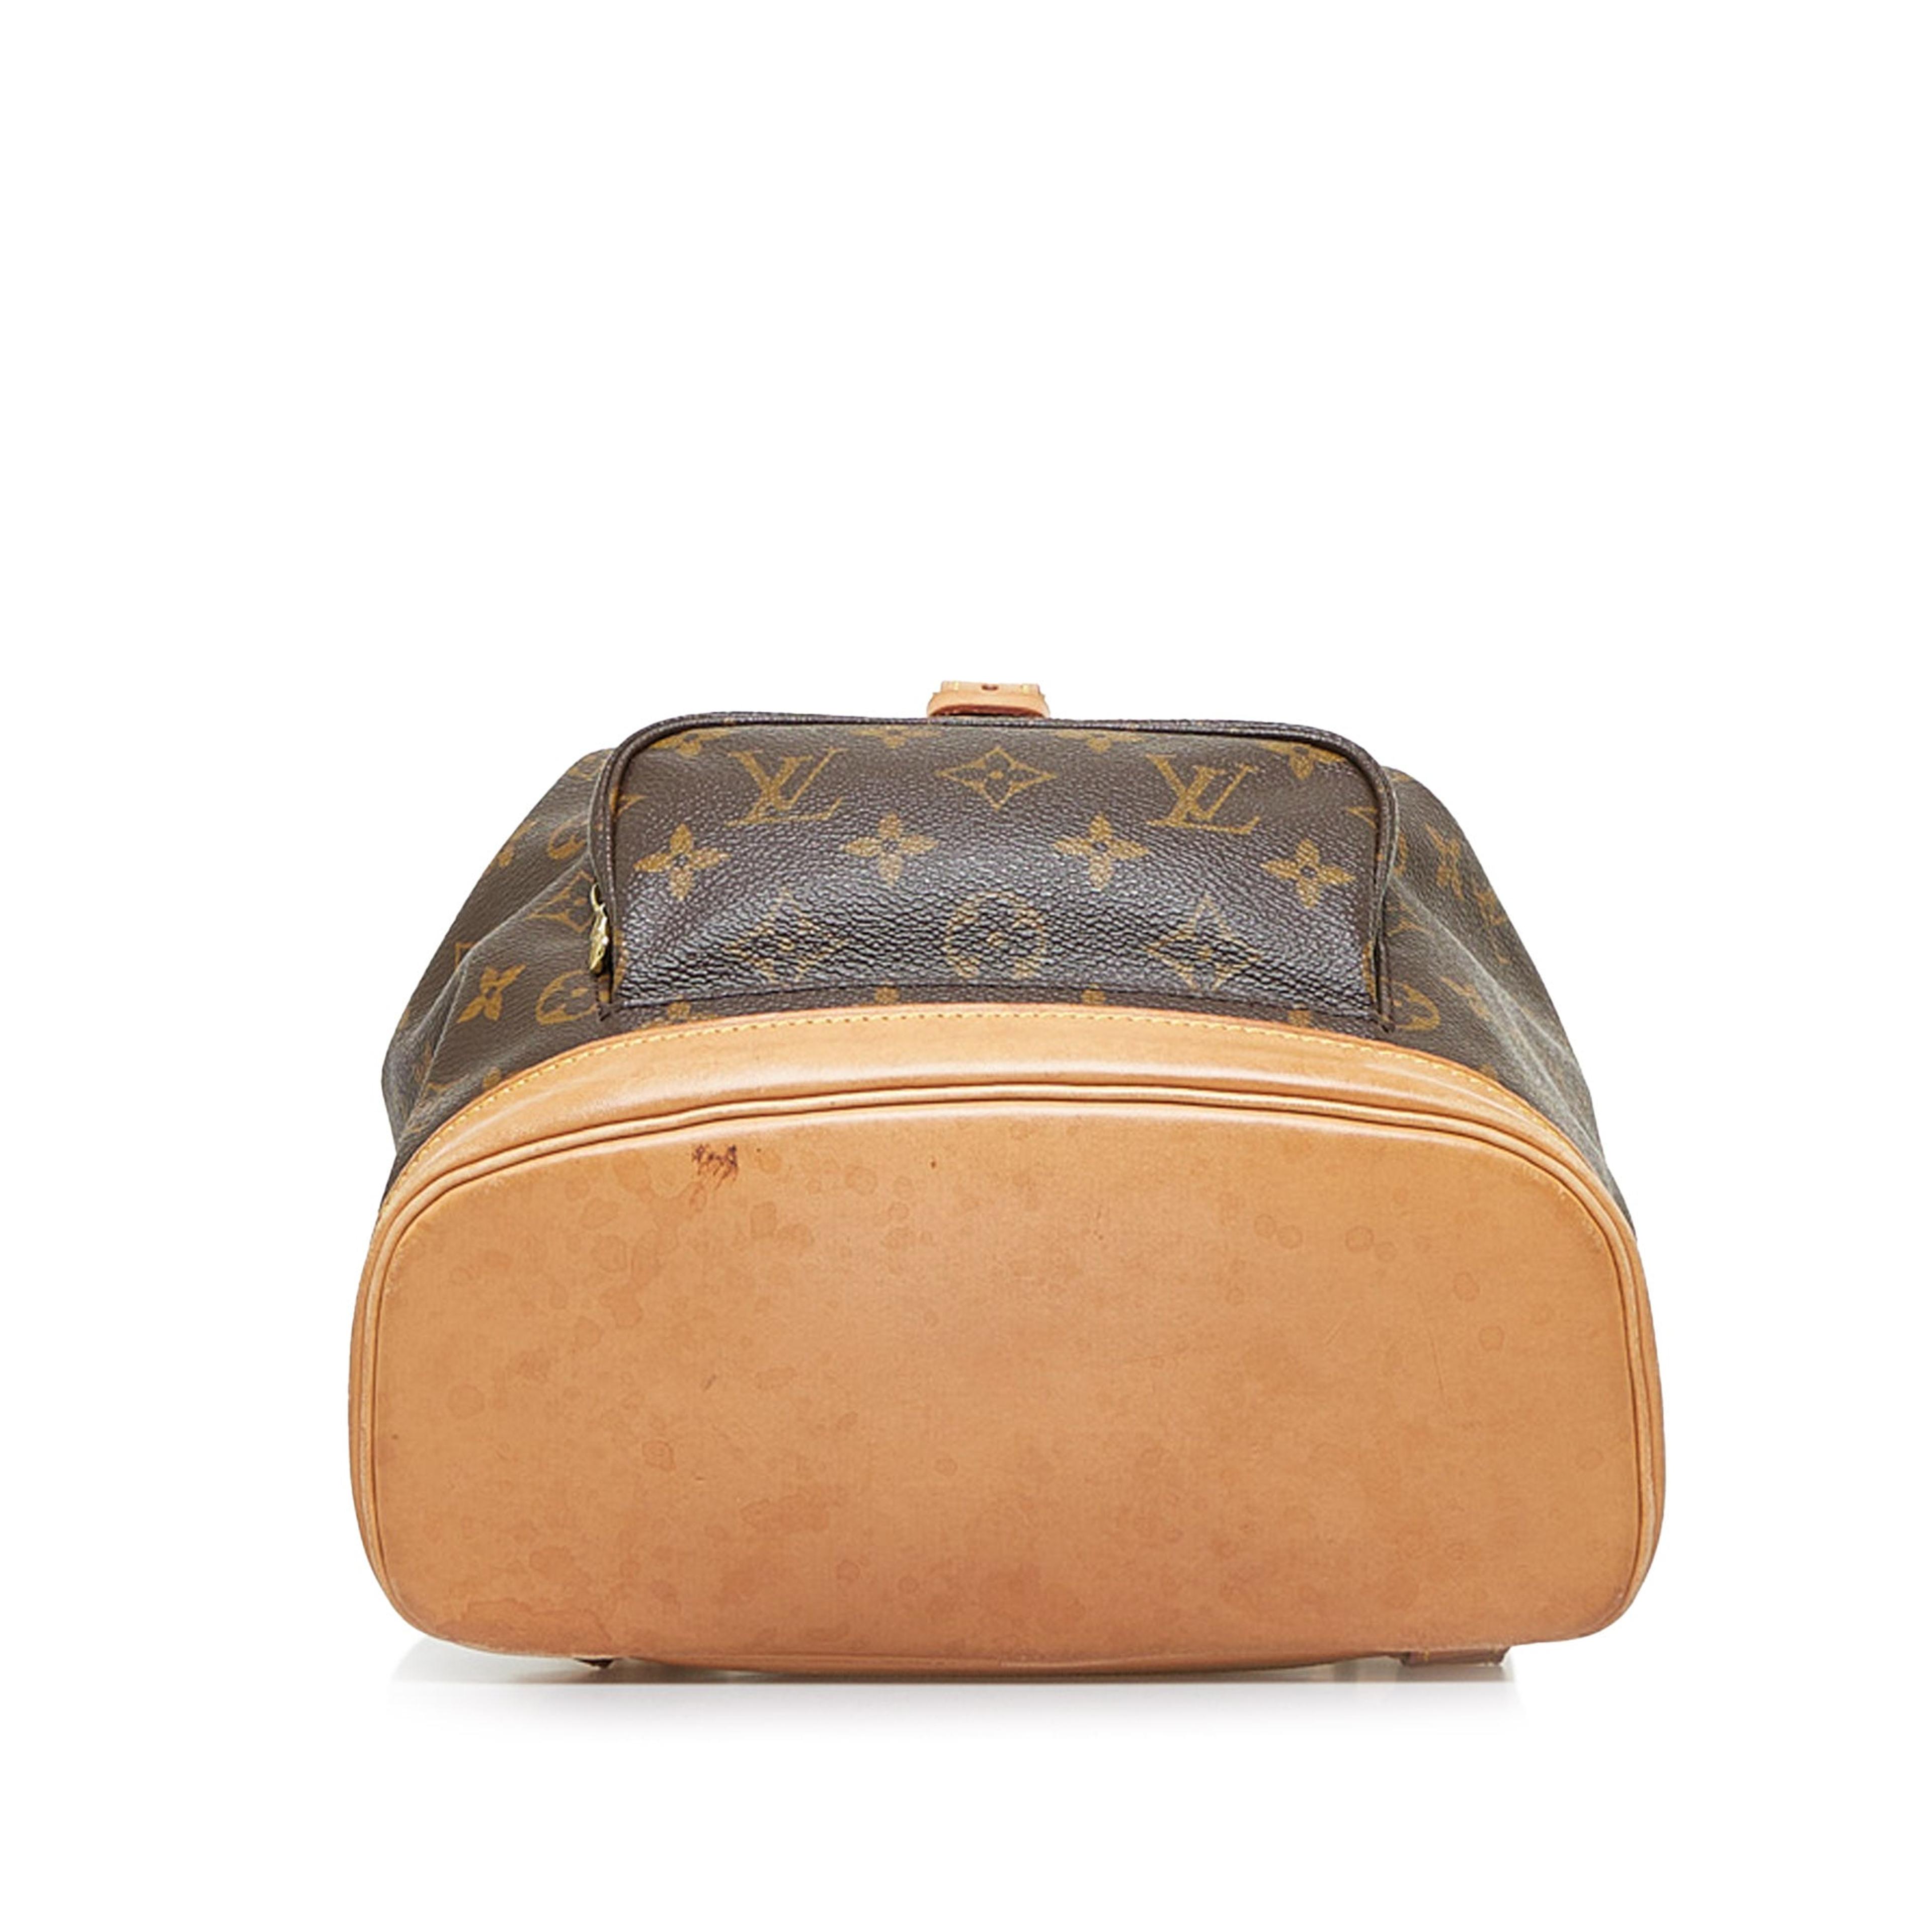 Preloved Louis Vuitton Monogram Montsouris MM Backpack SP1927